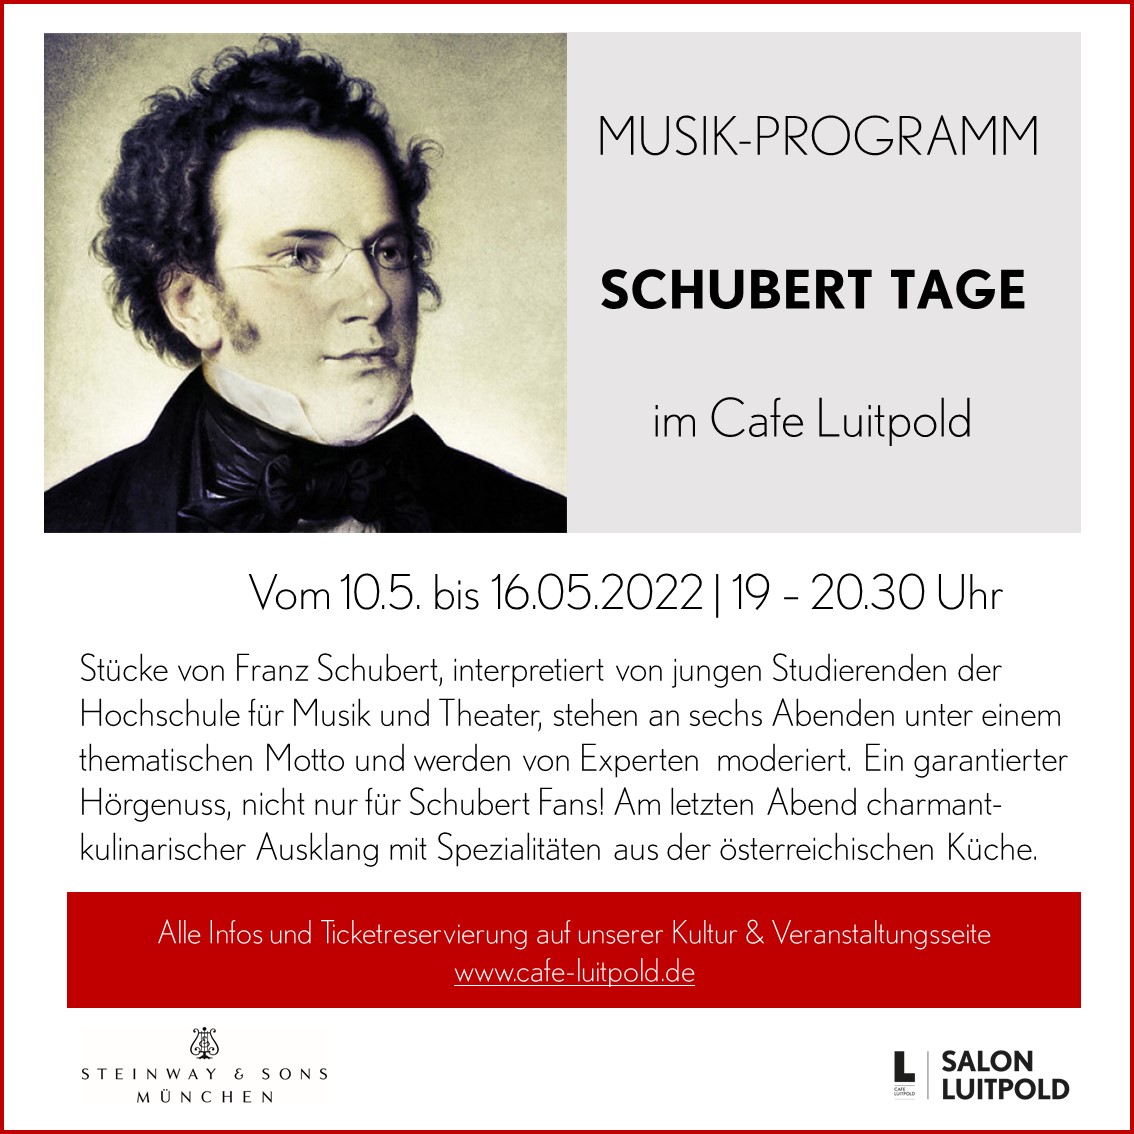 Schubert Tage im Cafe Luitpold